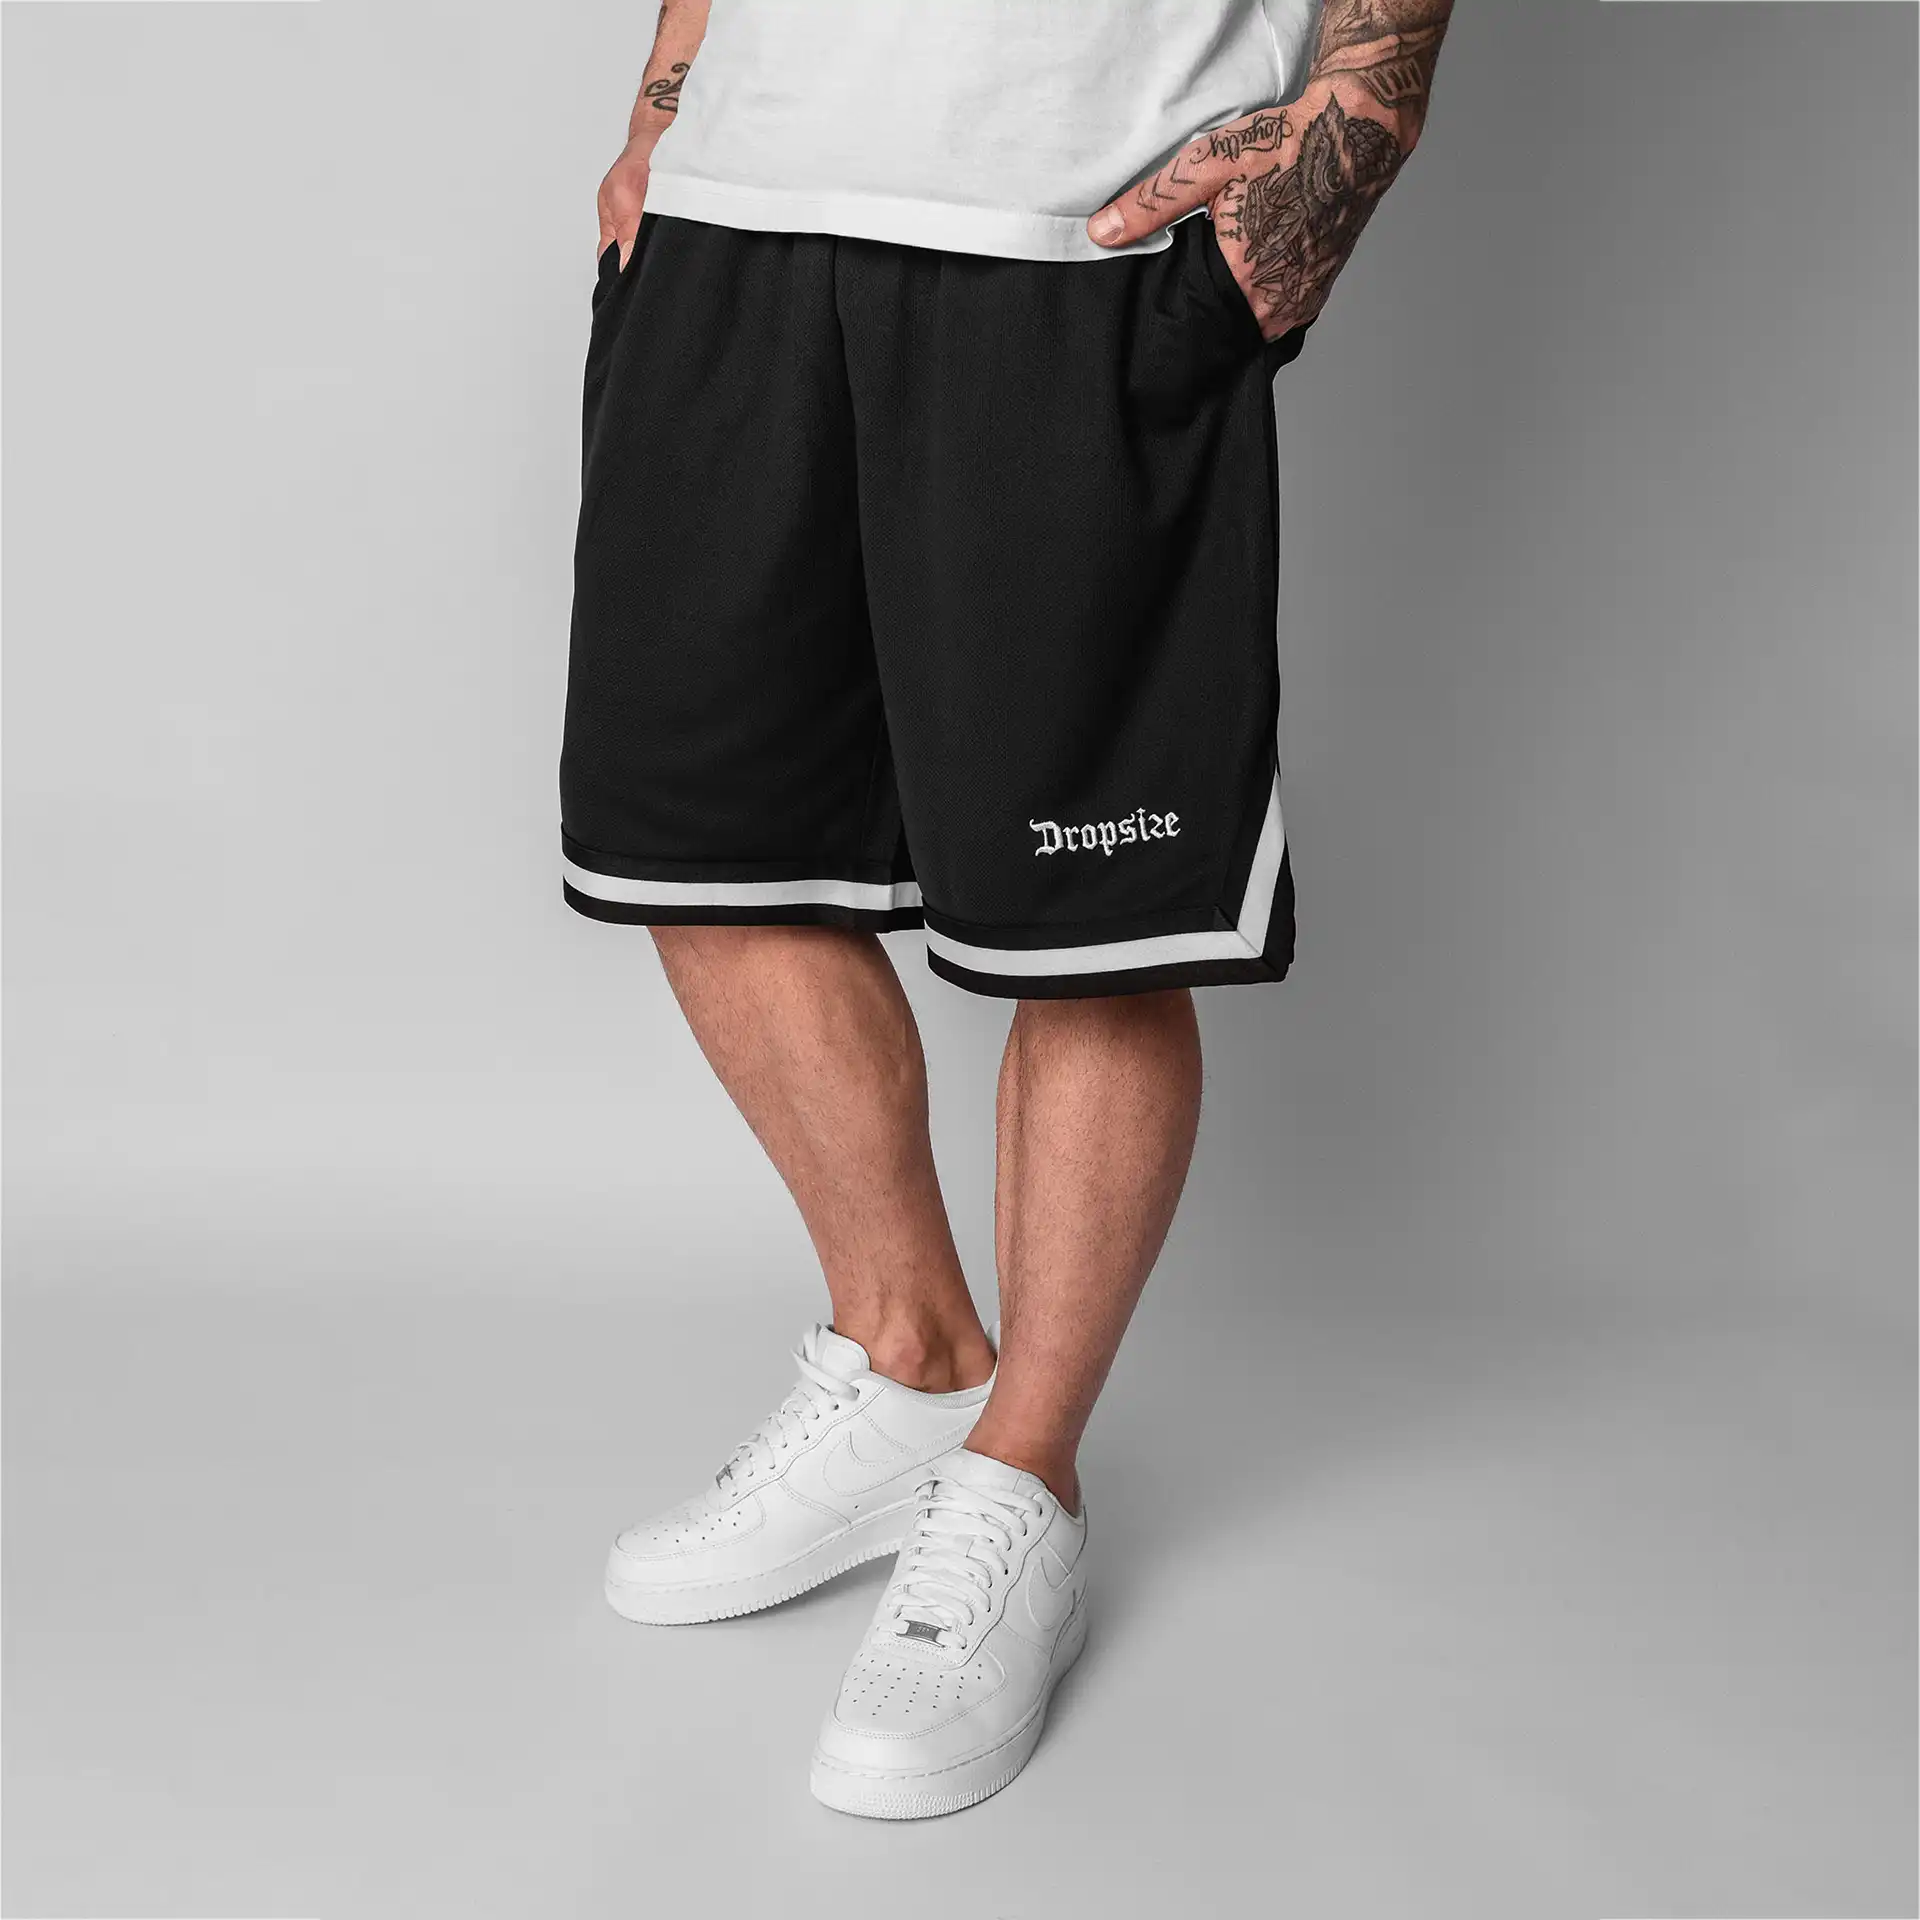 Dropsize Logo Mesh Shorts Black/White